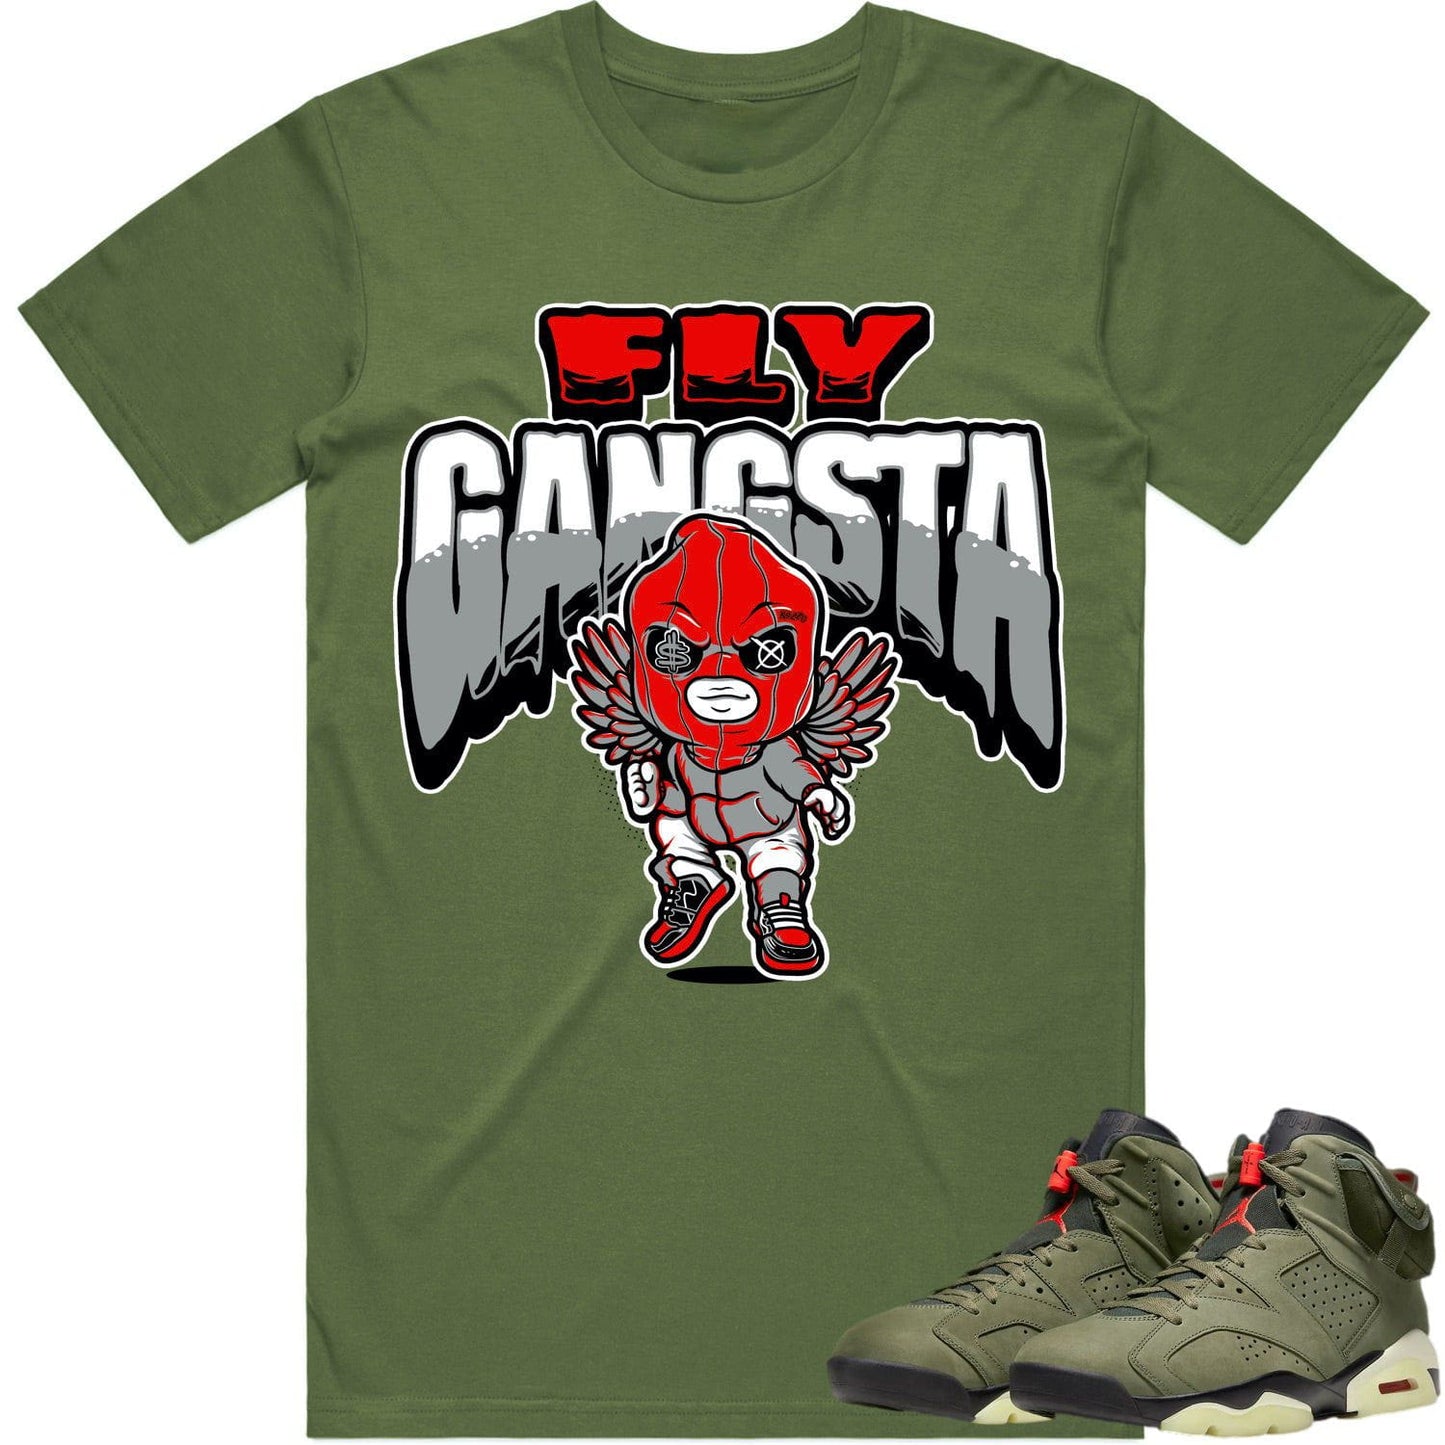 Cactus Jack 6s Shirt - Jordan 6 Travis Scott Shirts - Red Fly Gangsta